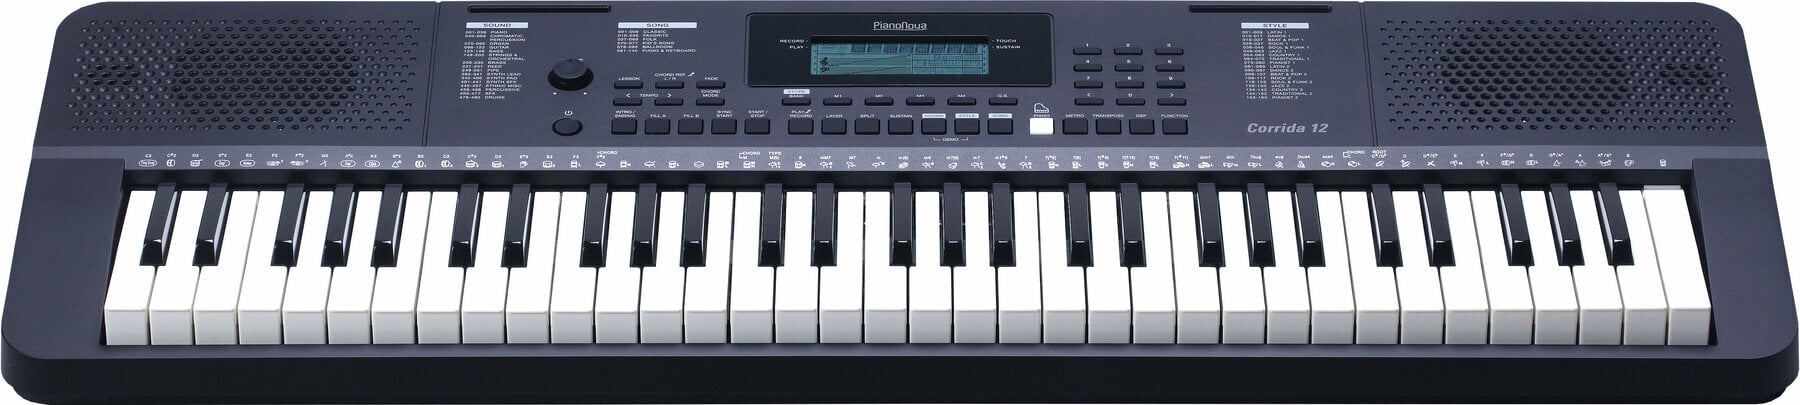 Keyboard met aanslaggevoeligheid Pianonova Corrida 12